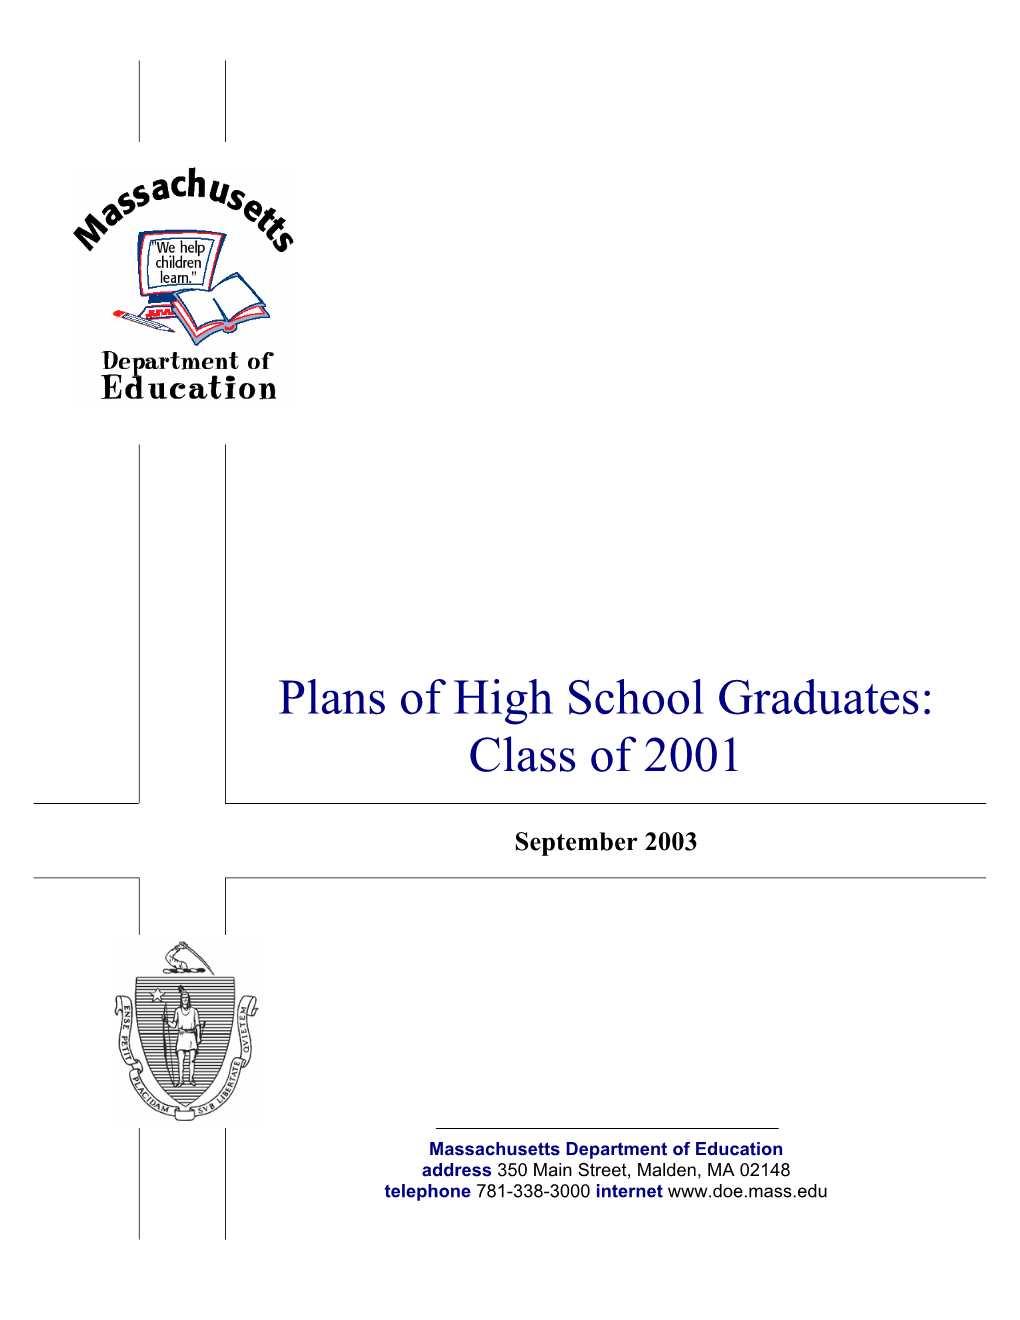 Plans of High School Graduates: Class of 2001